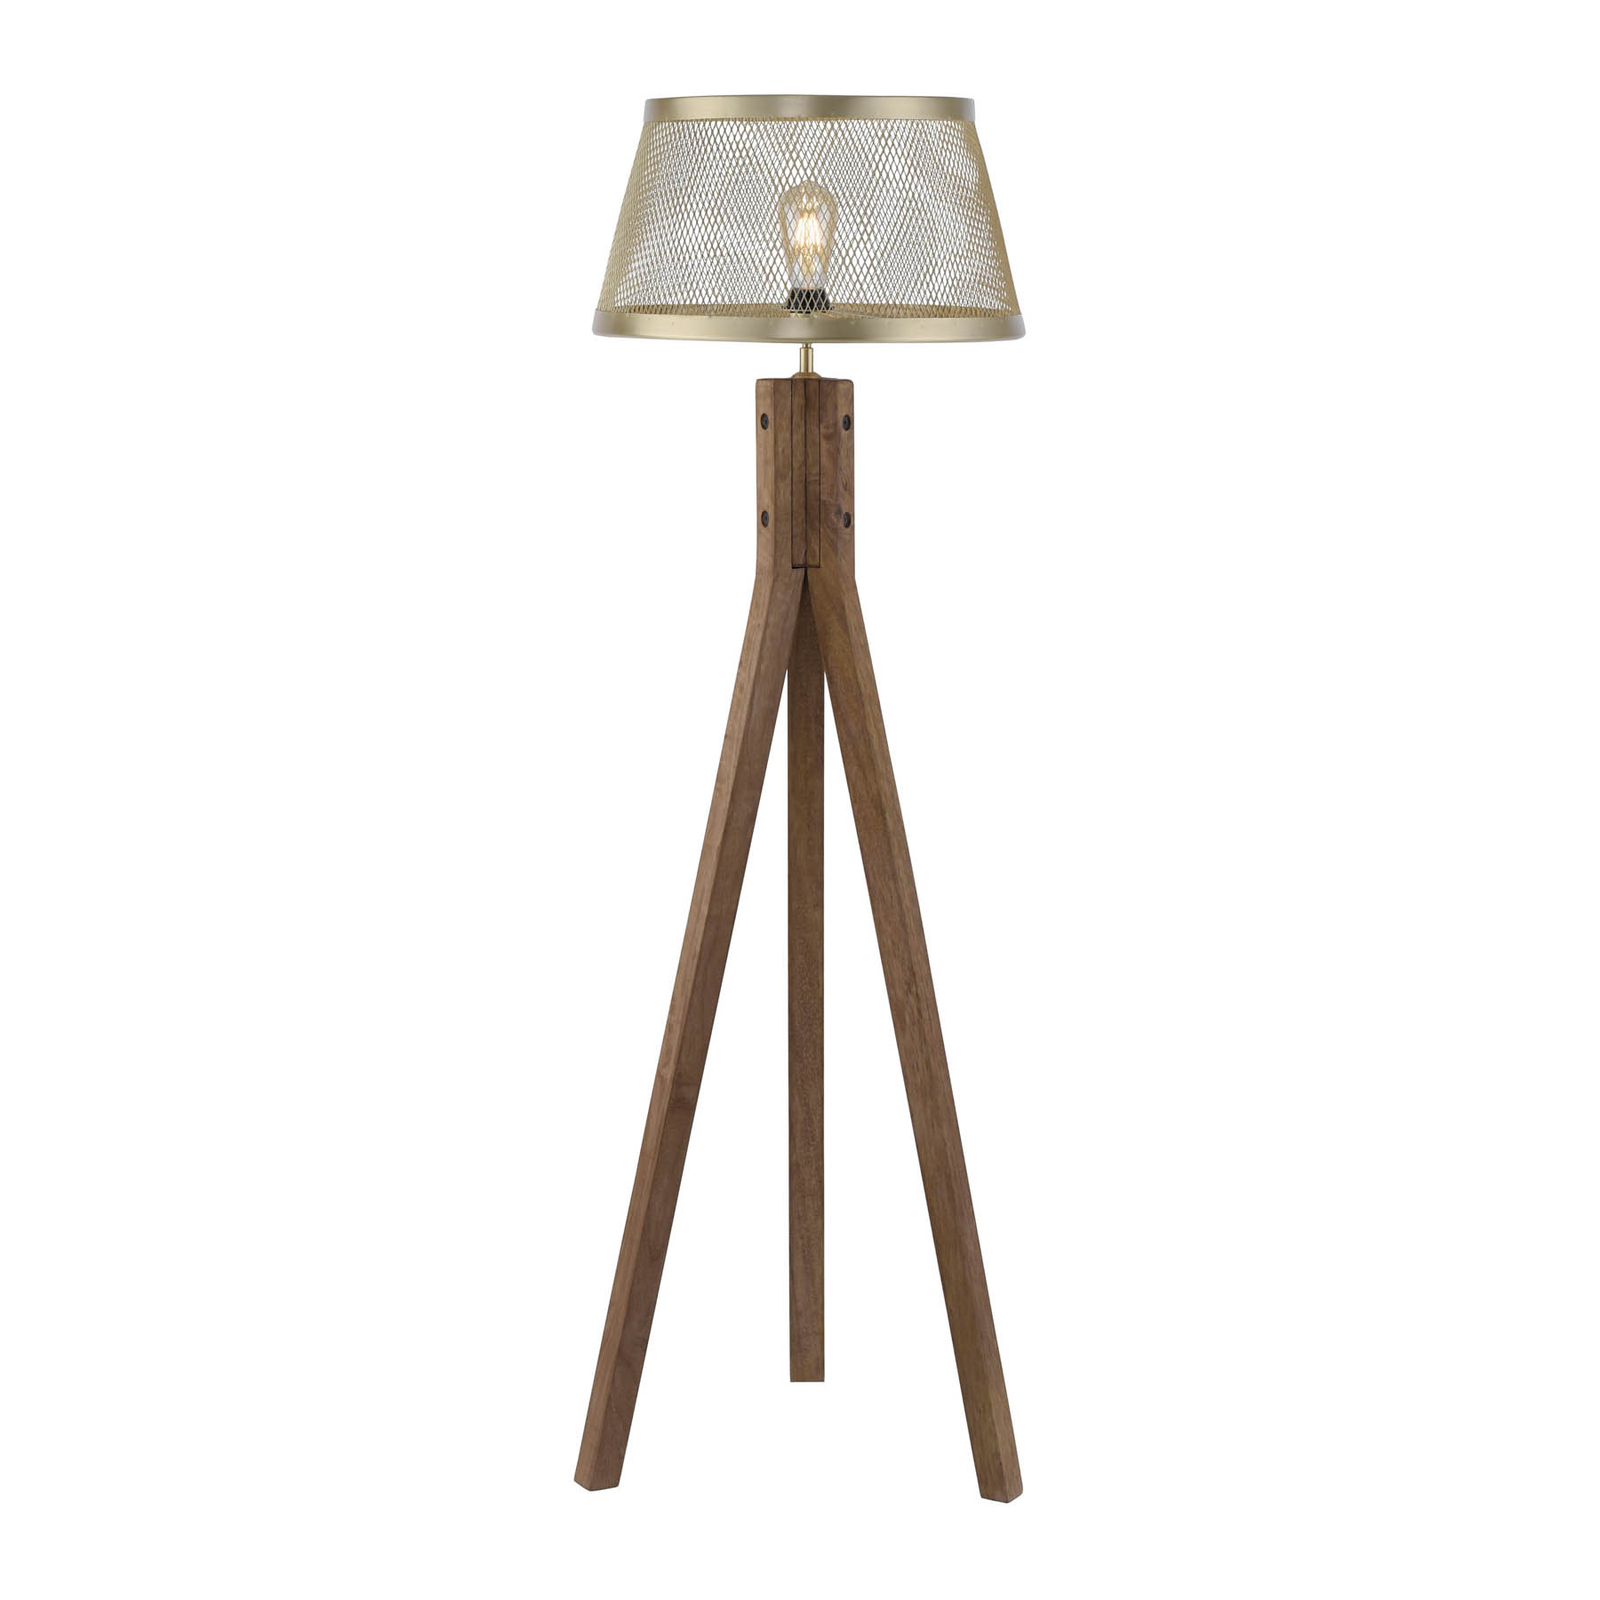 Frederik wooden floor lamp, tripod